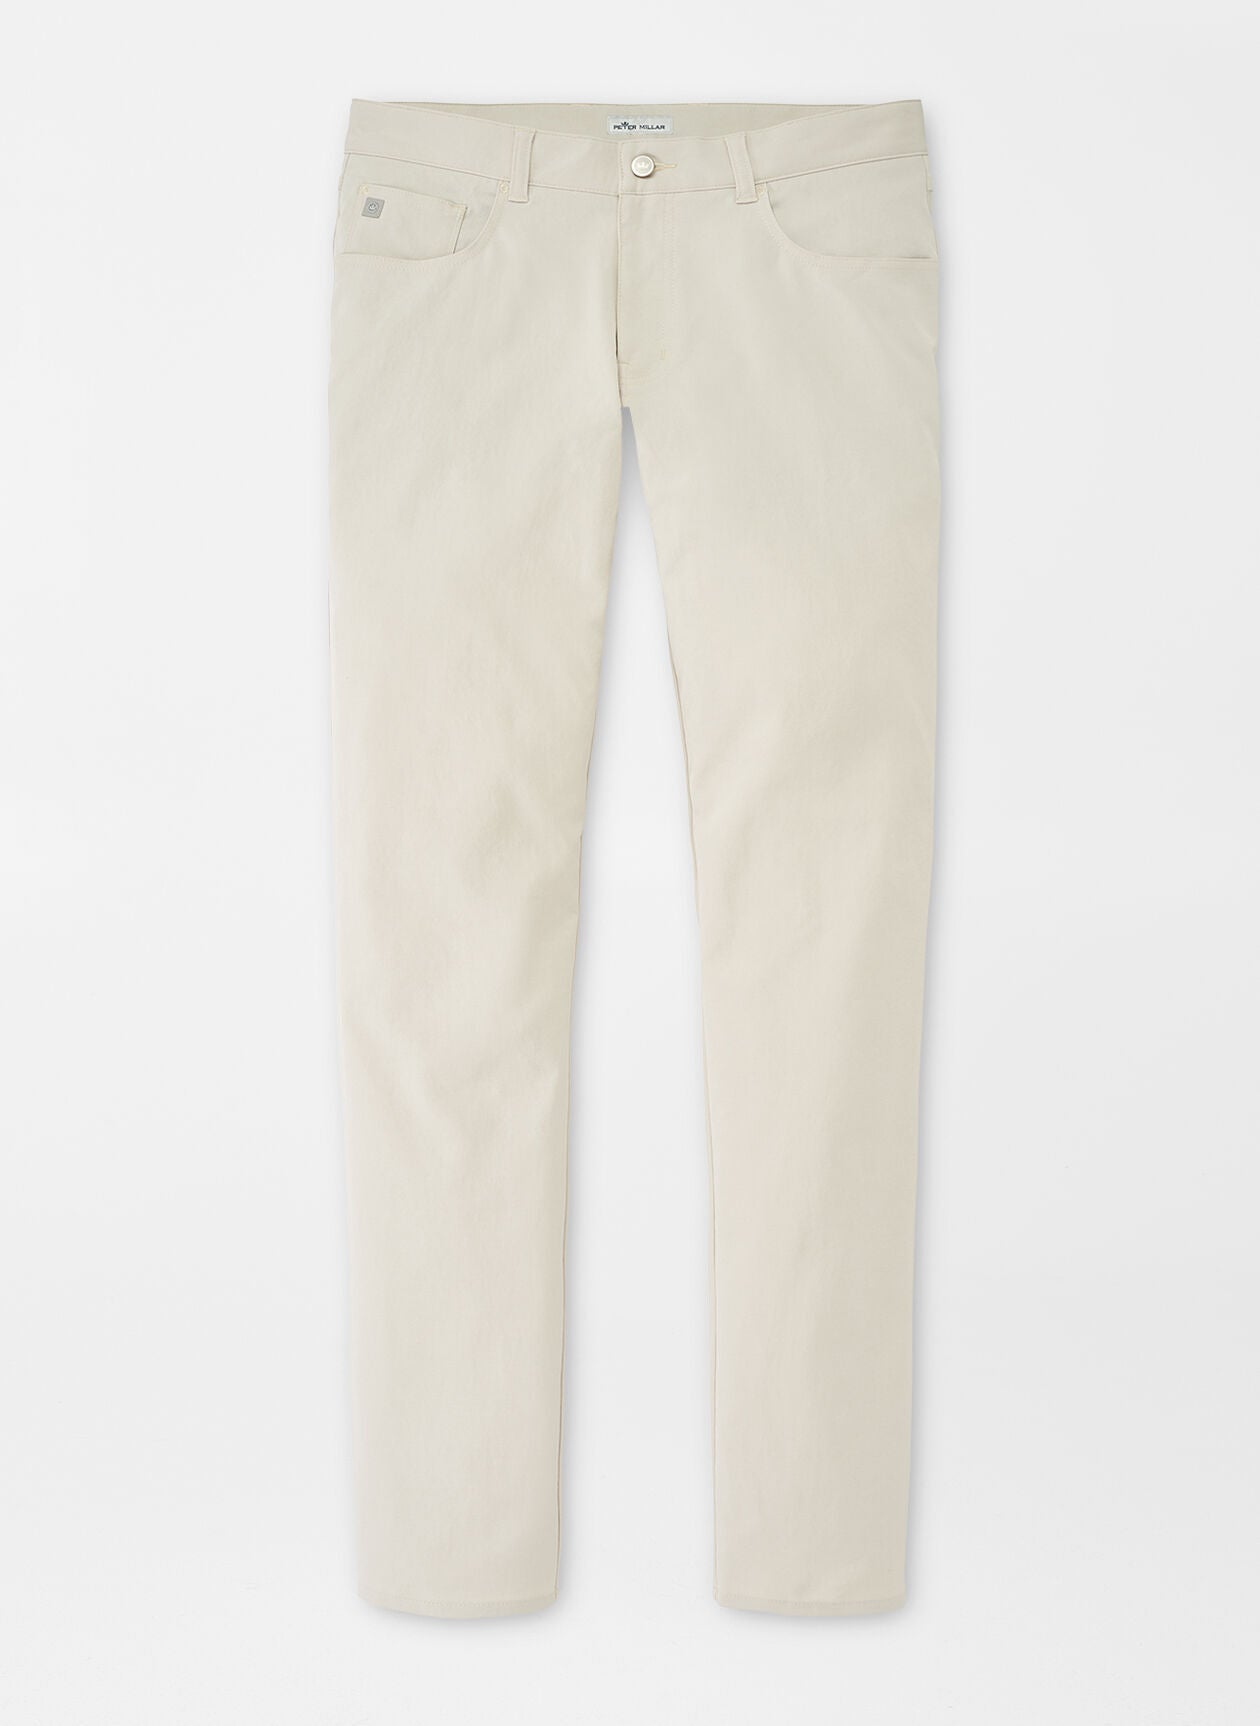 Peter Millar Eb66 Performance 6 Pocket Pants, $145, Neiman Marcus